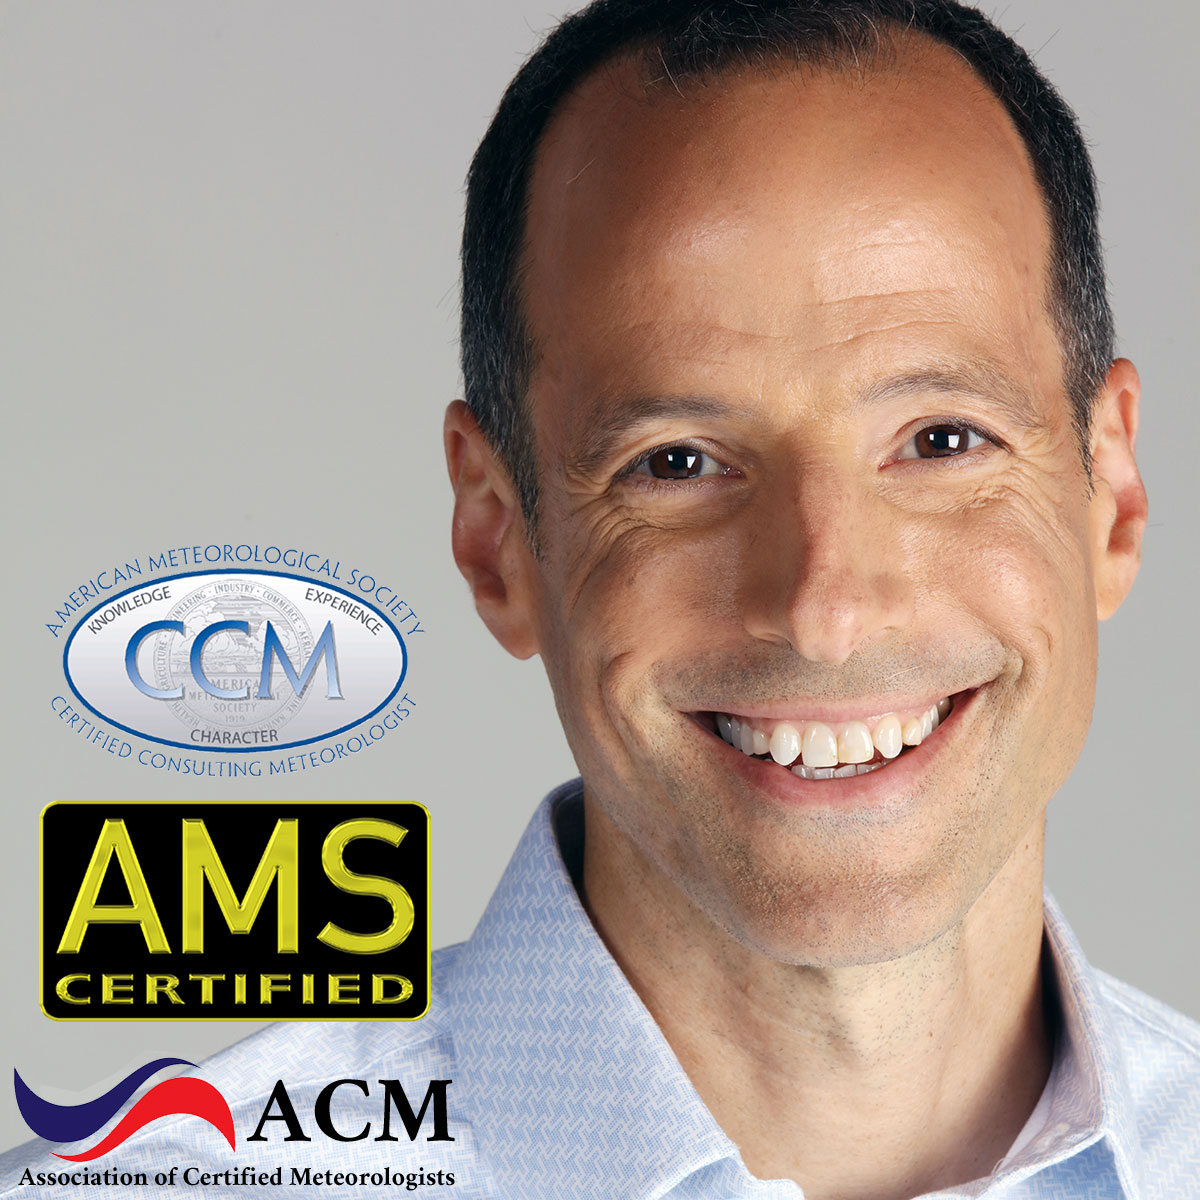 Meteorologist Fred Campagna - AMS, CCM, CBM, ACM